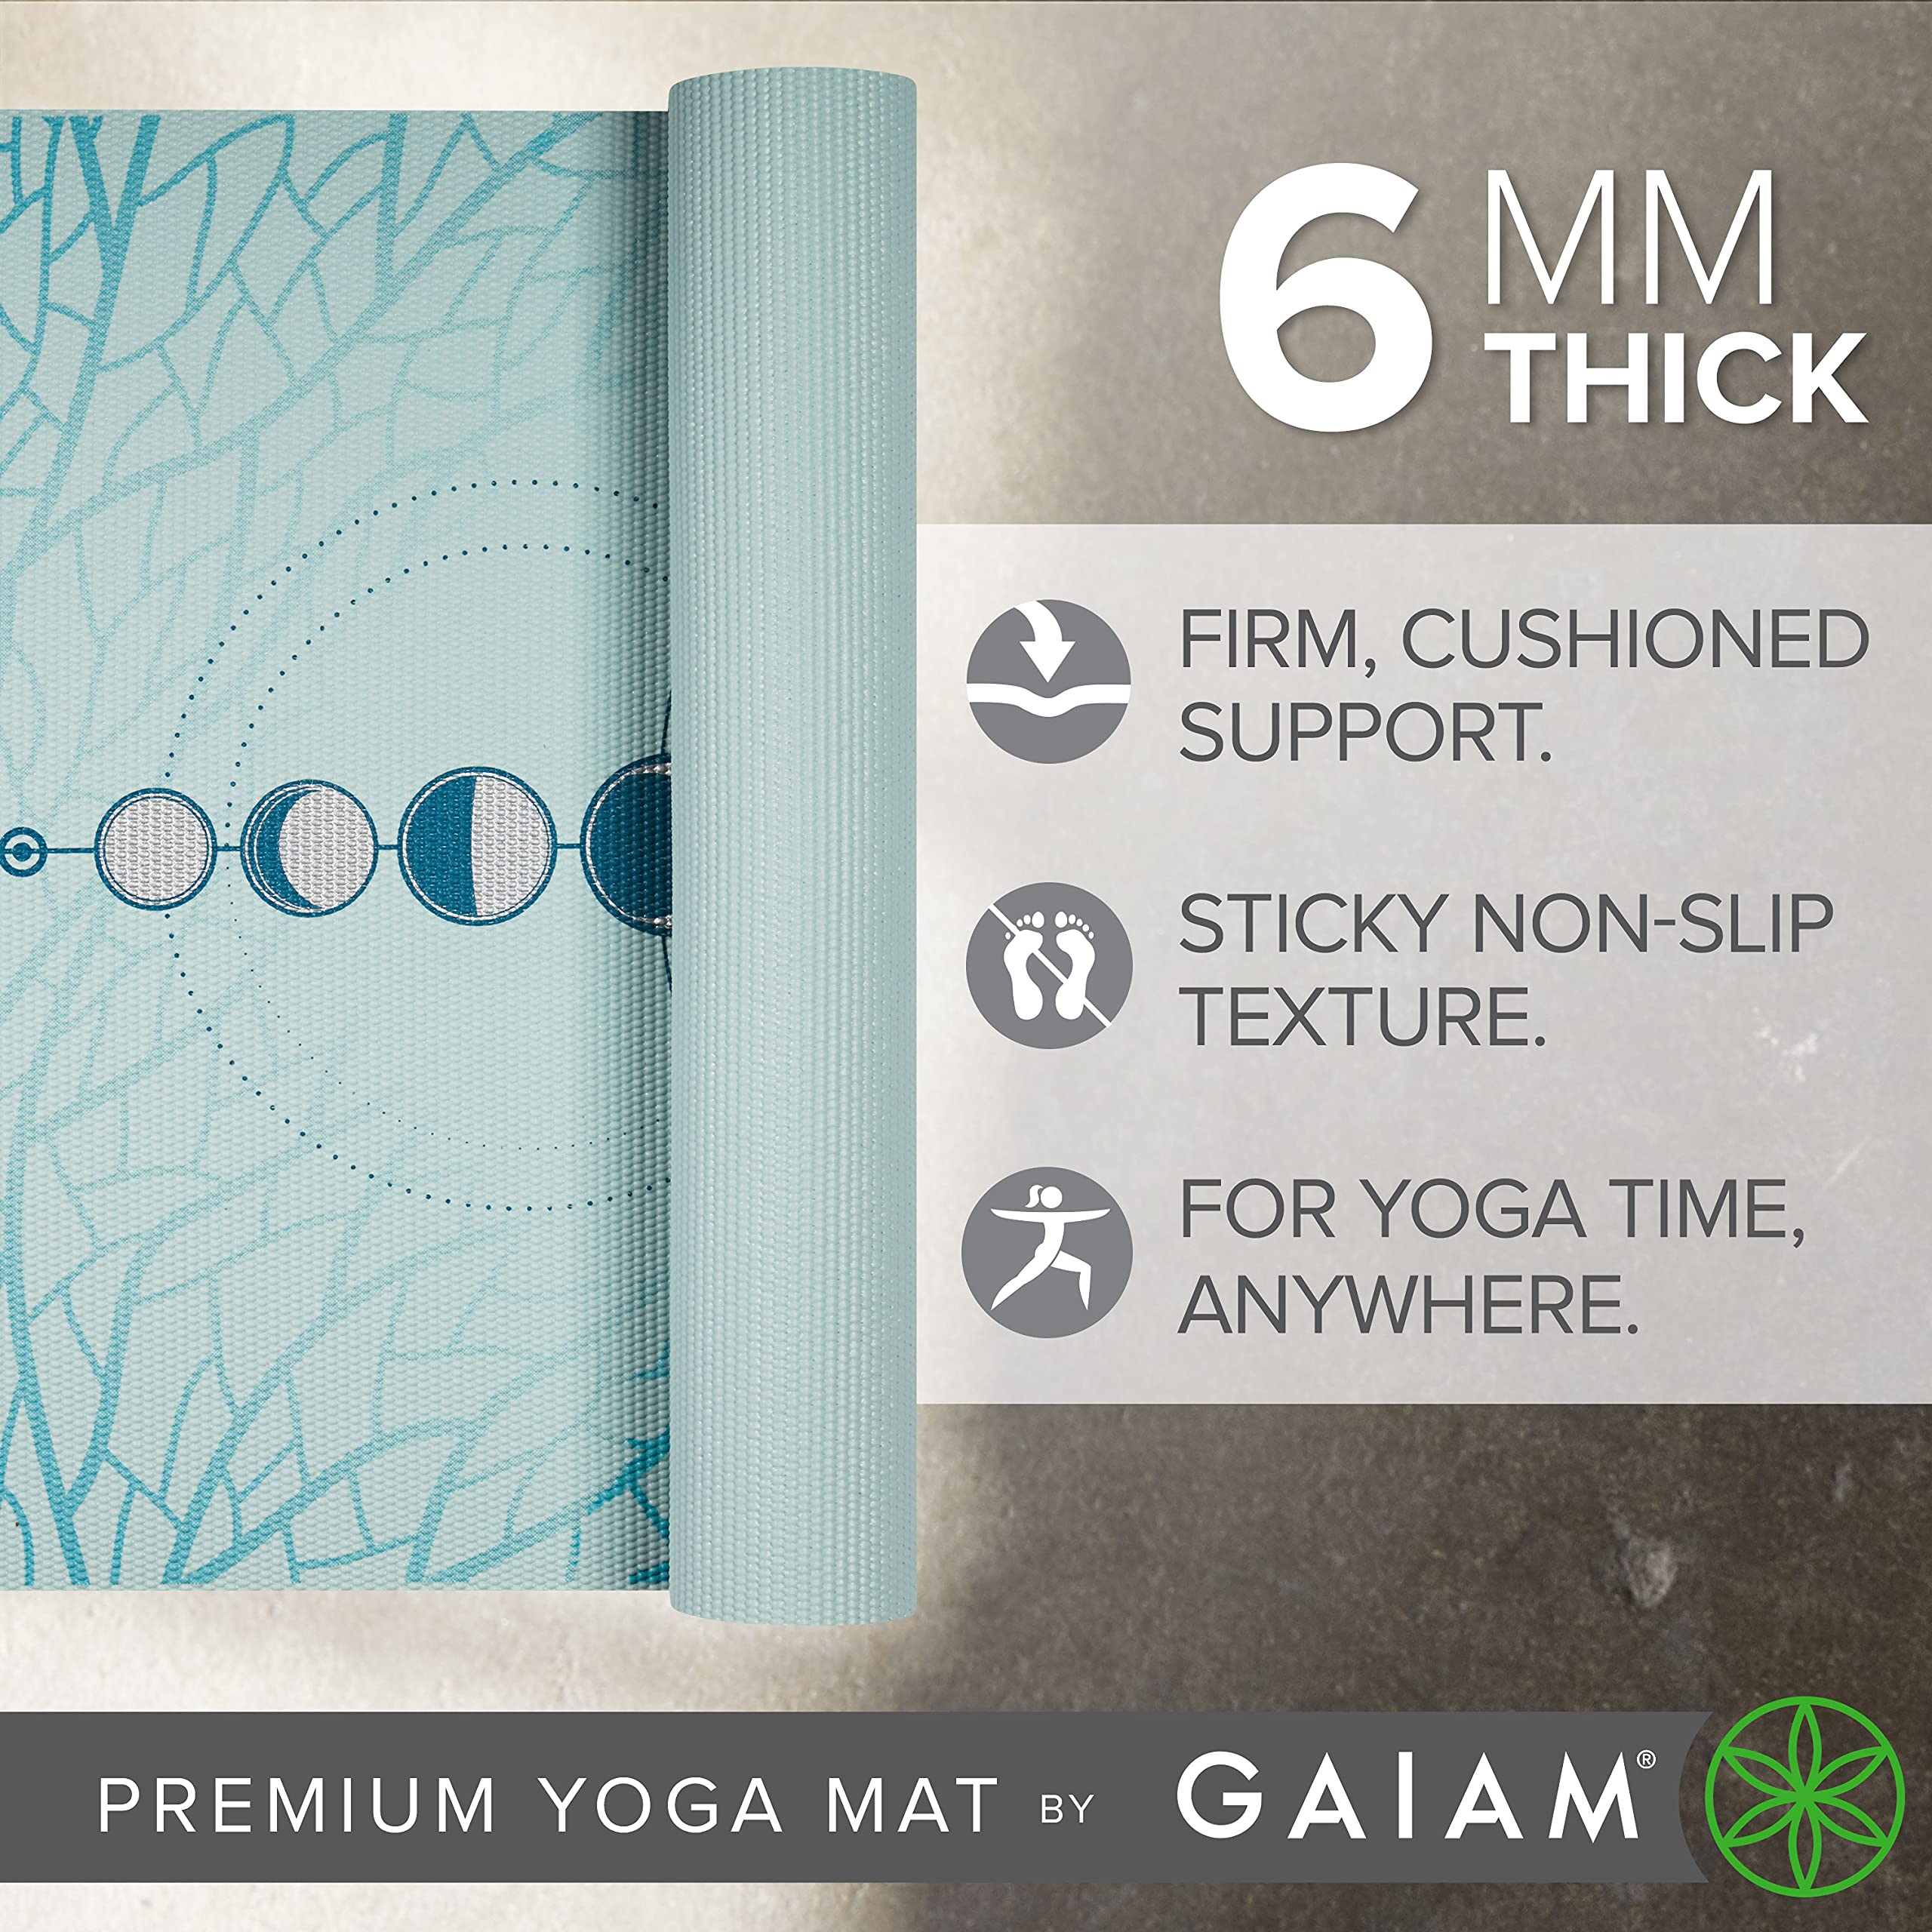 Gaiam Niagara Premium Yoga Mat 68 6mm Extra Thick at